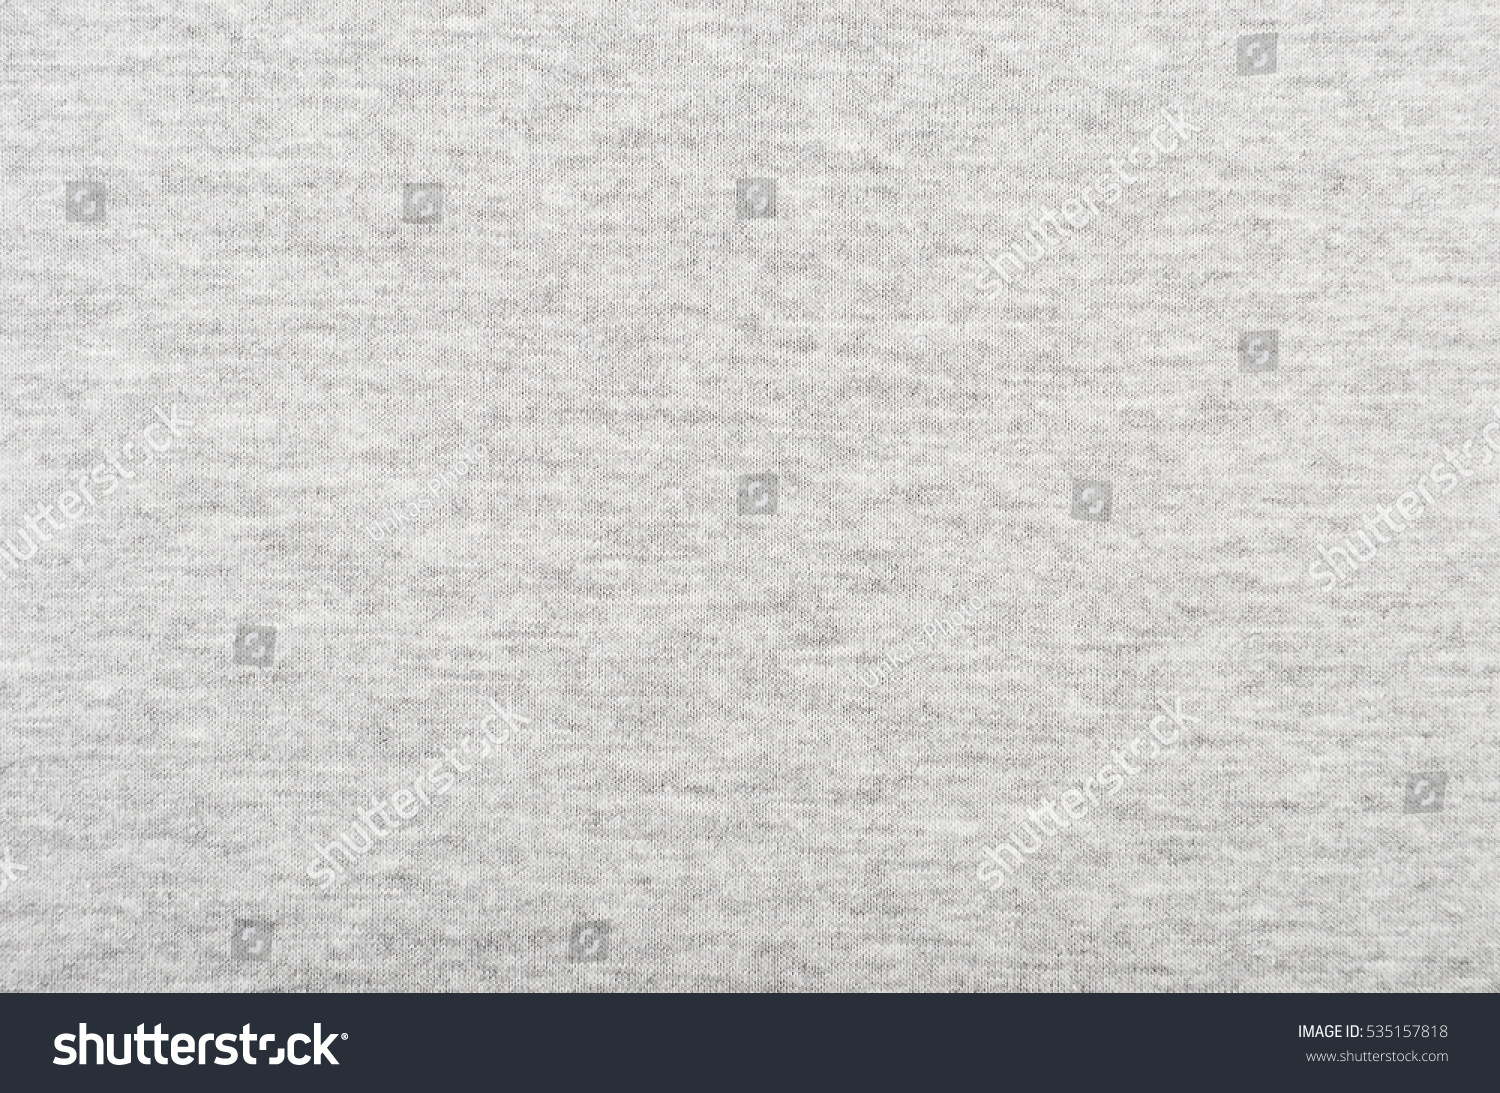 Closeup Jersey Fabric Textured Cloth Background Stock Photo 535157818 ...